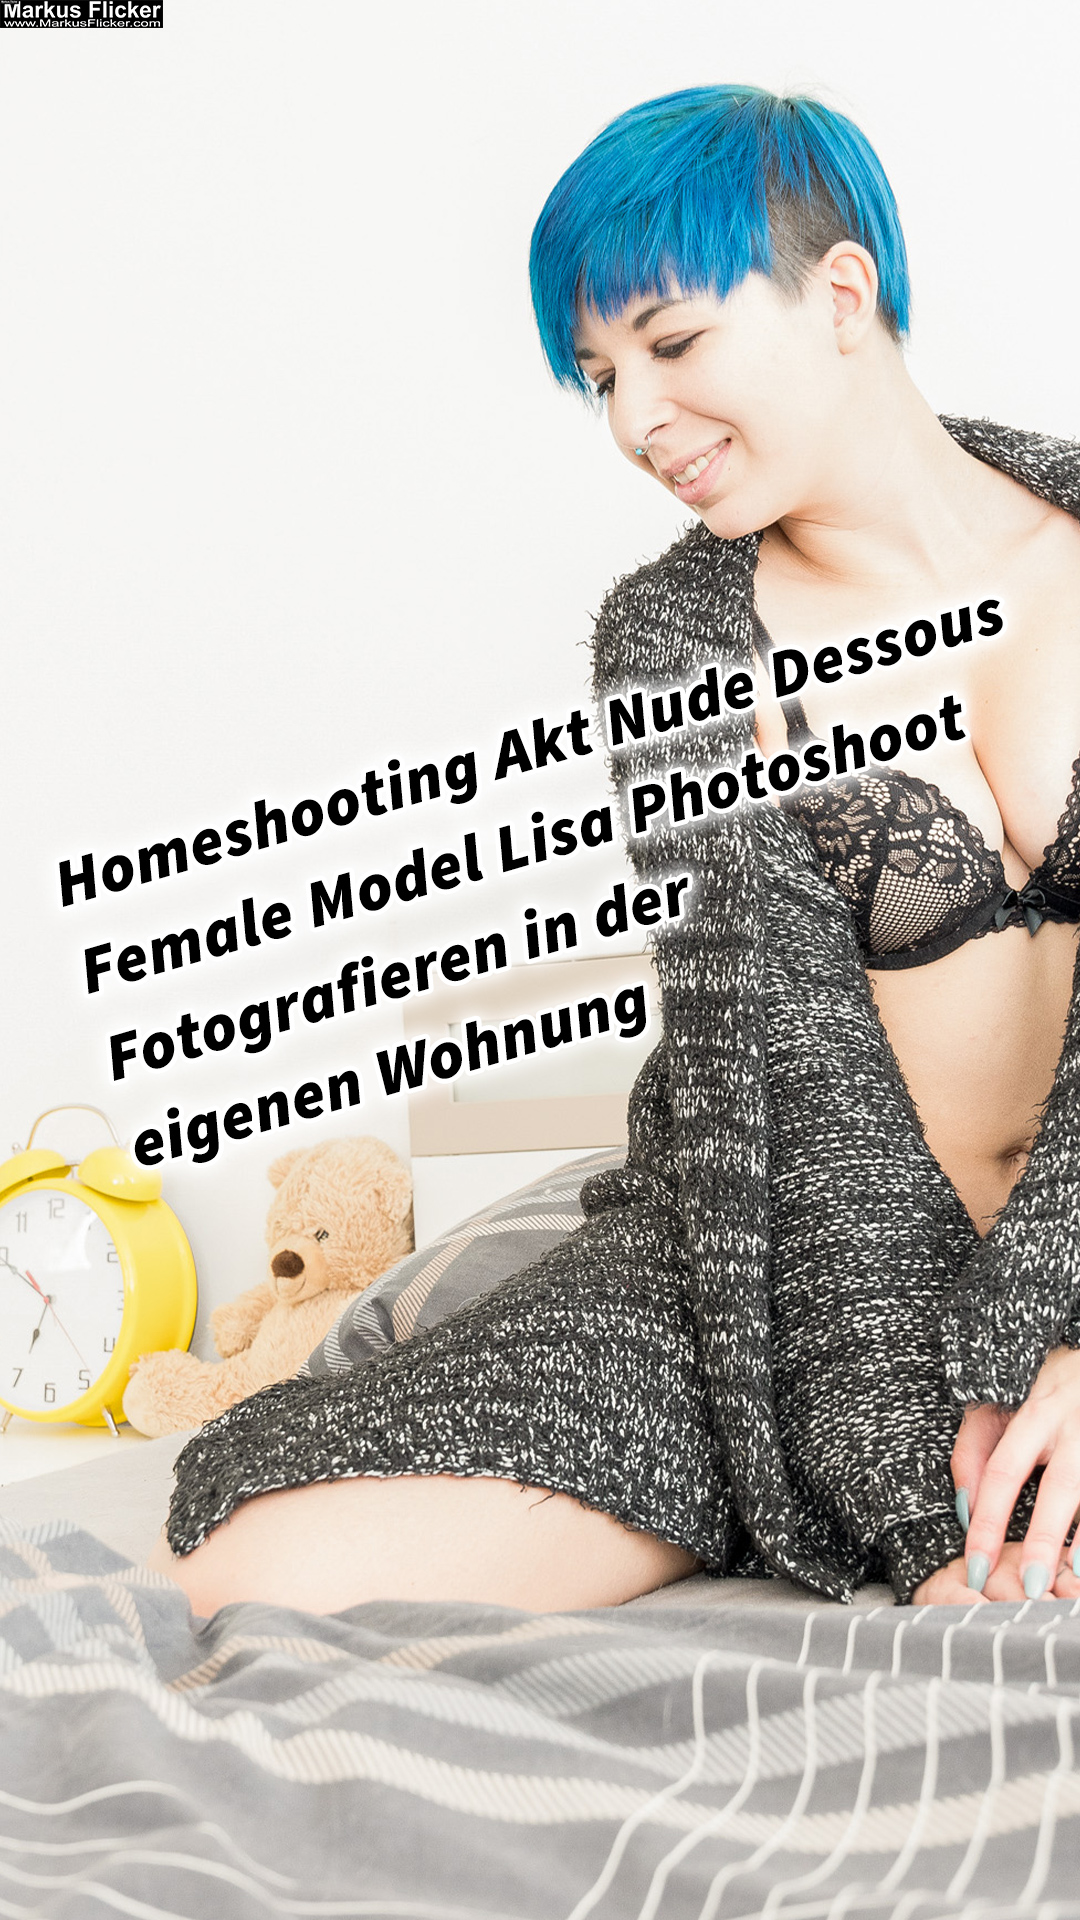 Homeshooting Akt Nude Dessous Female Model Lisa Photoshoot Fotografieren in der eigenen Wohnung